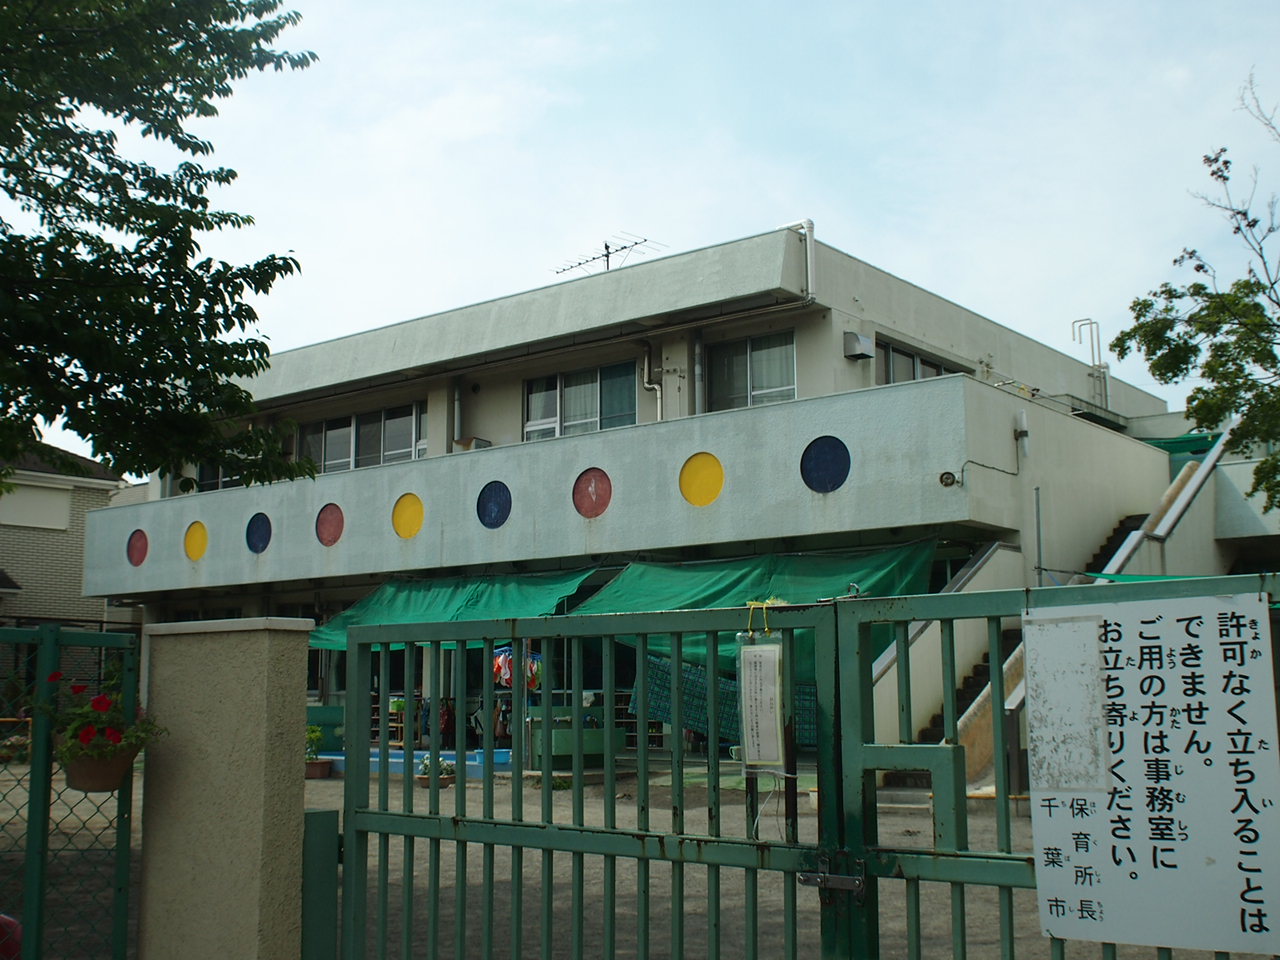 kindergarten ・ Nursery. City nursery school (kindergarten ・ 491m to the nursery)